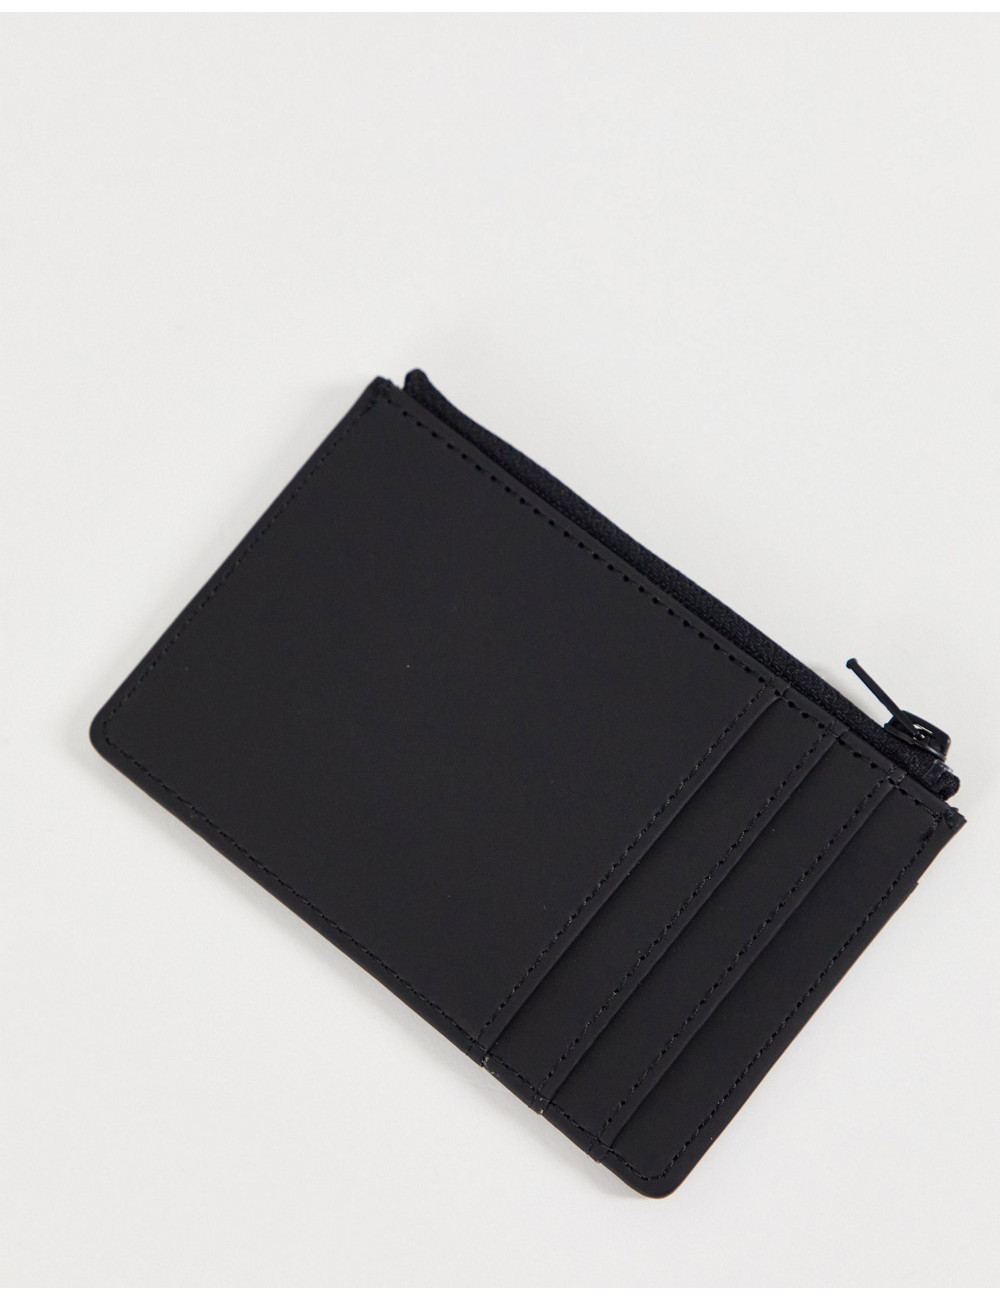 Rains 1645 zip wallet in black